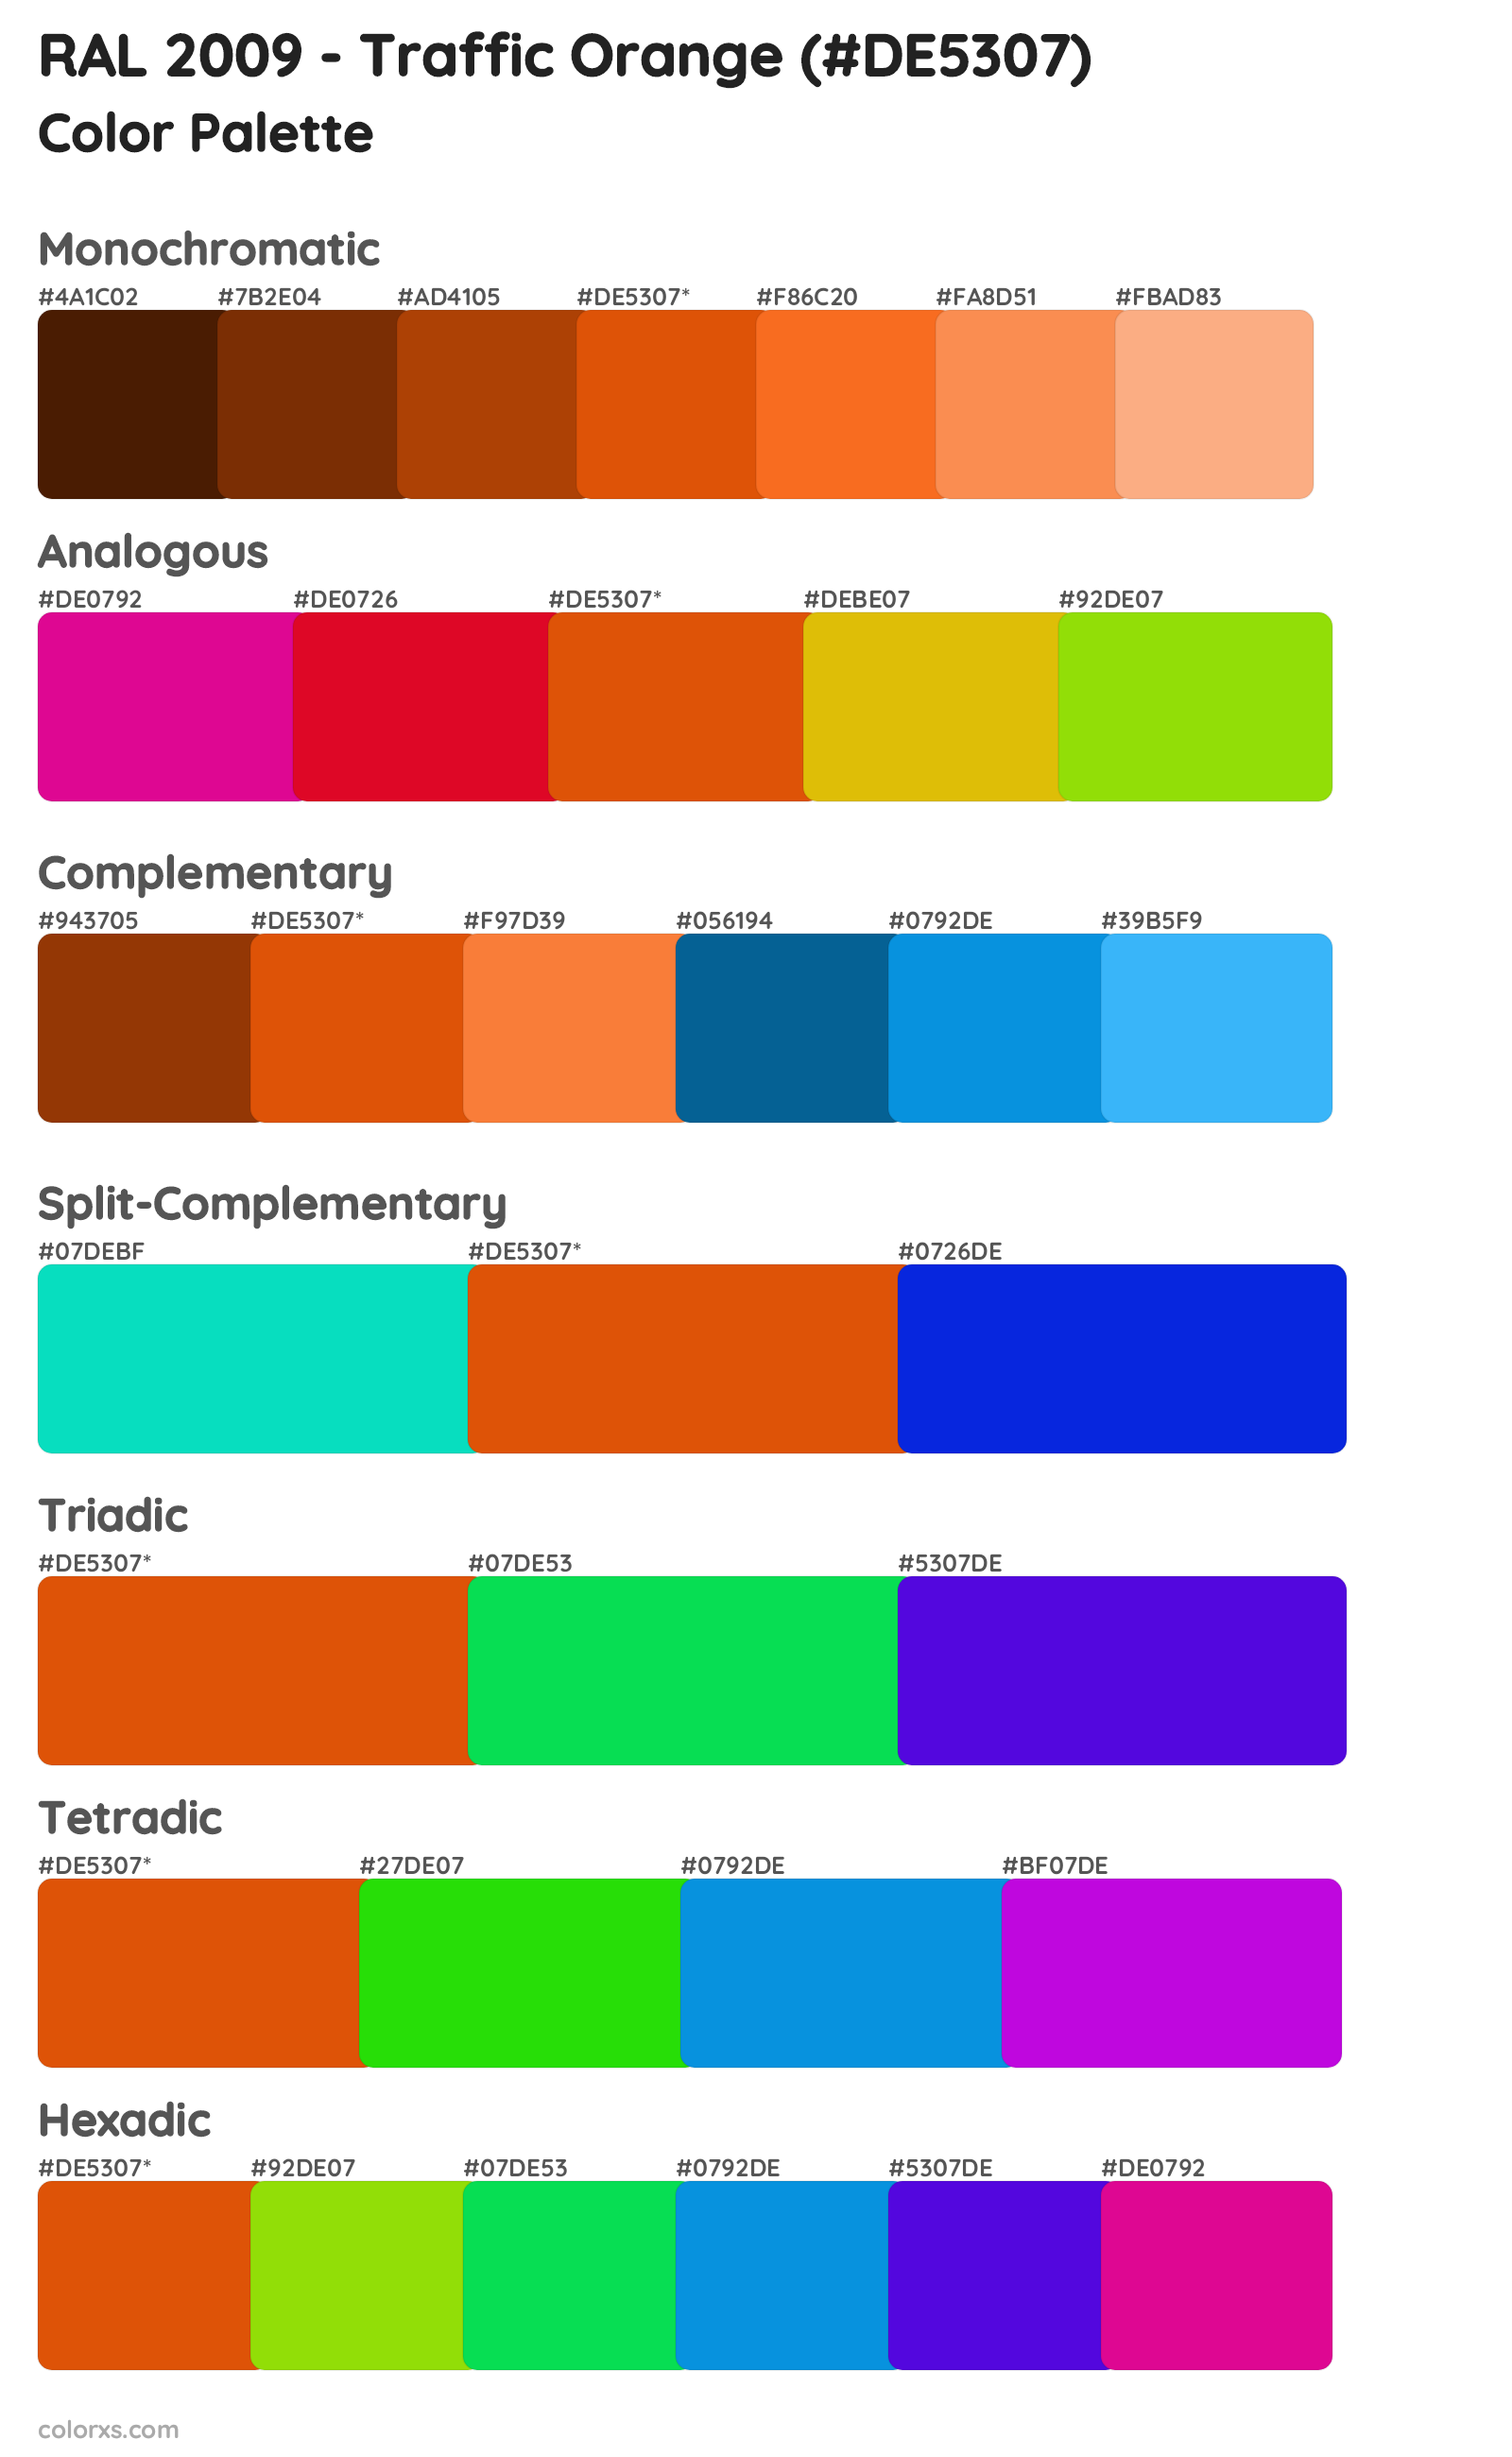 RAL 2009 - Traffic Orange Color Scheme Palettes